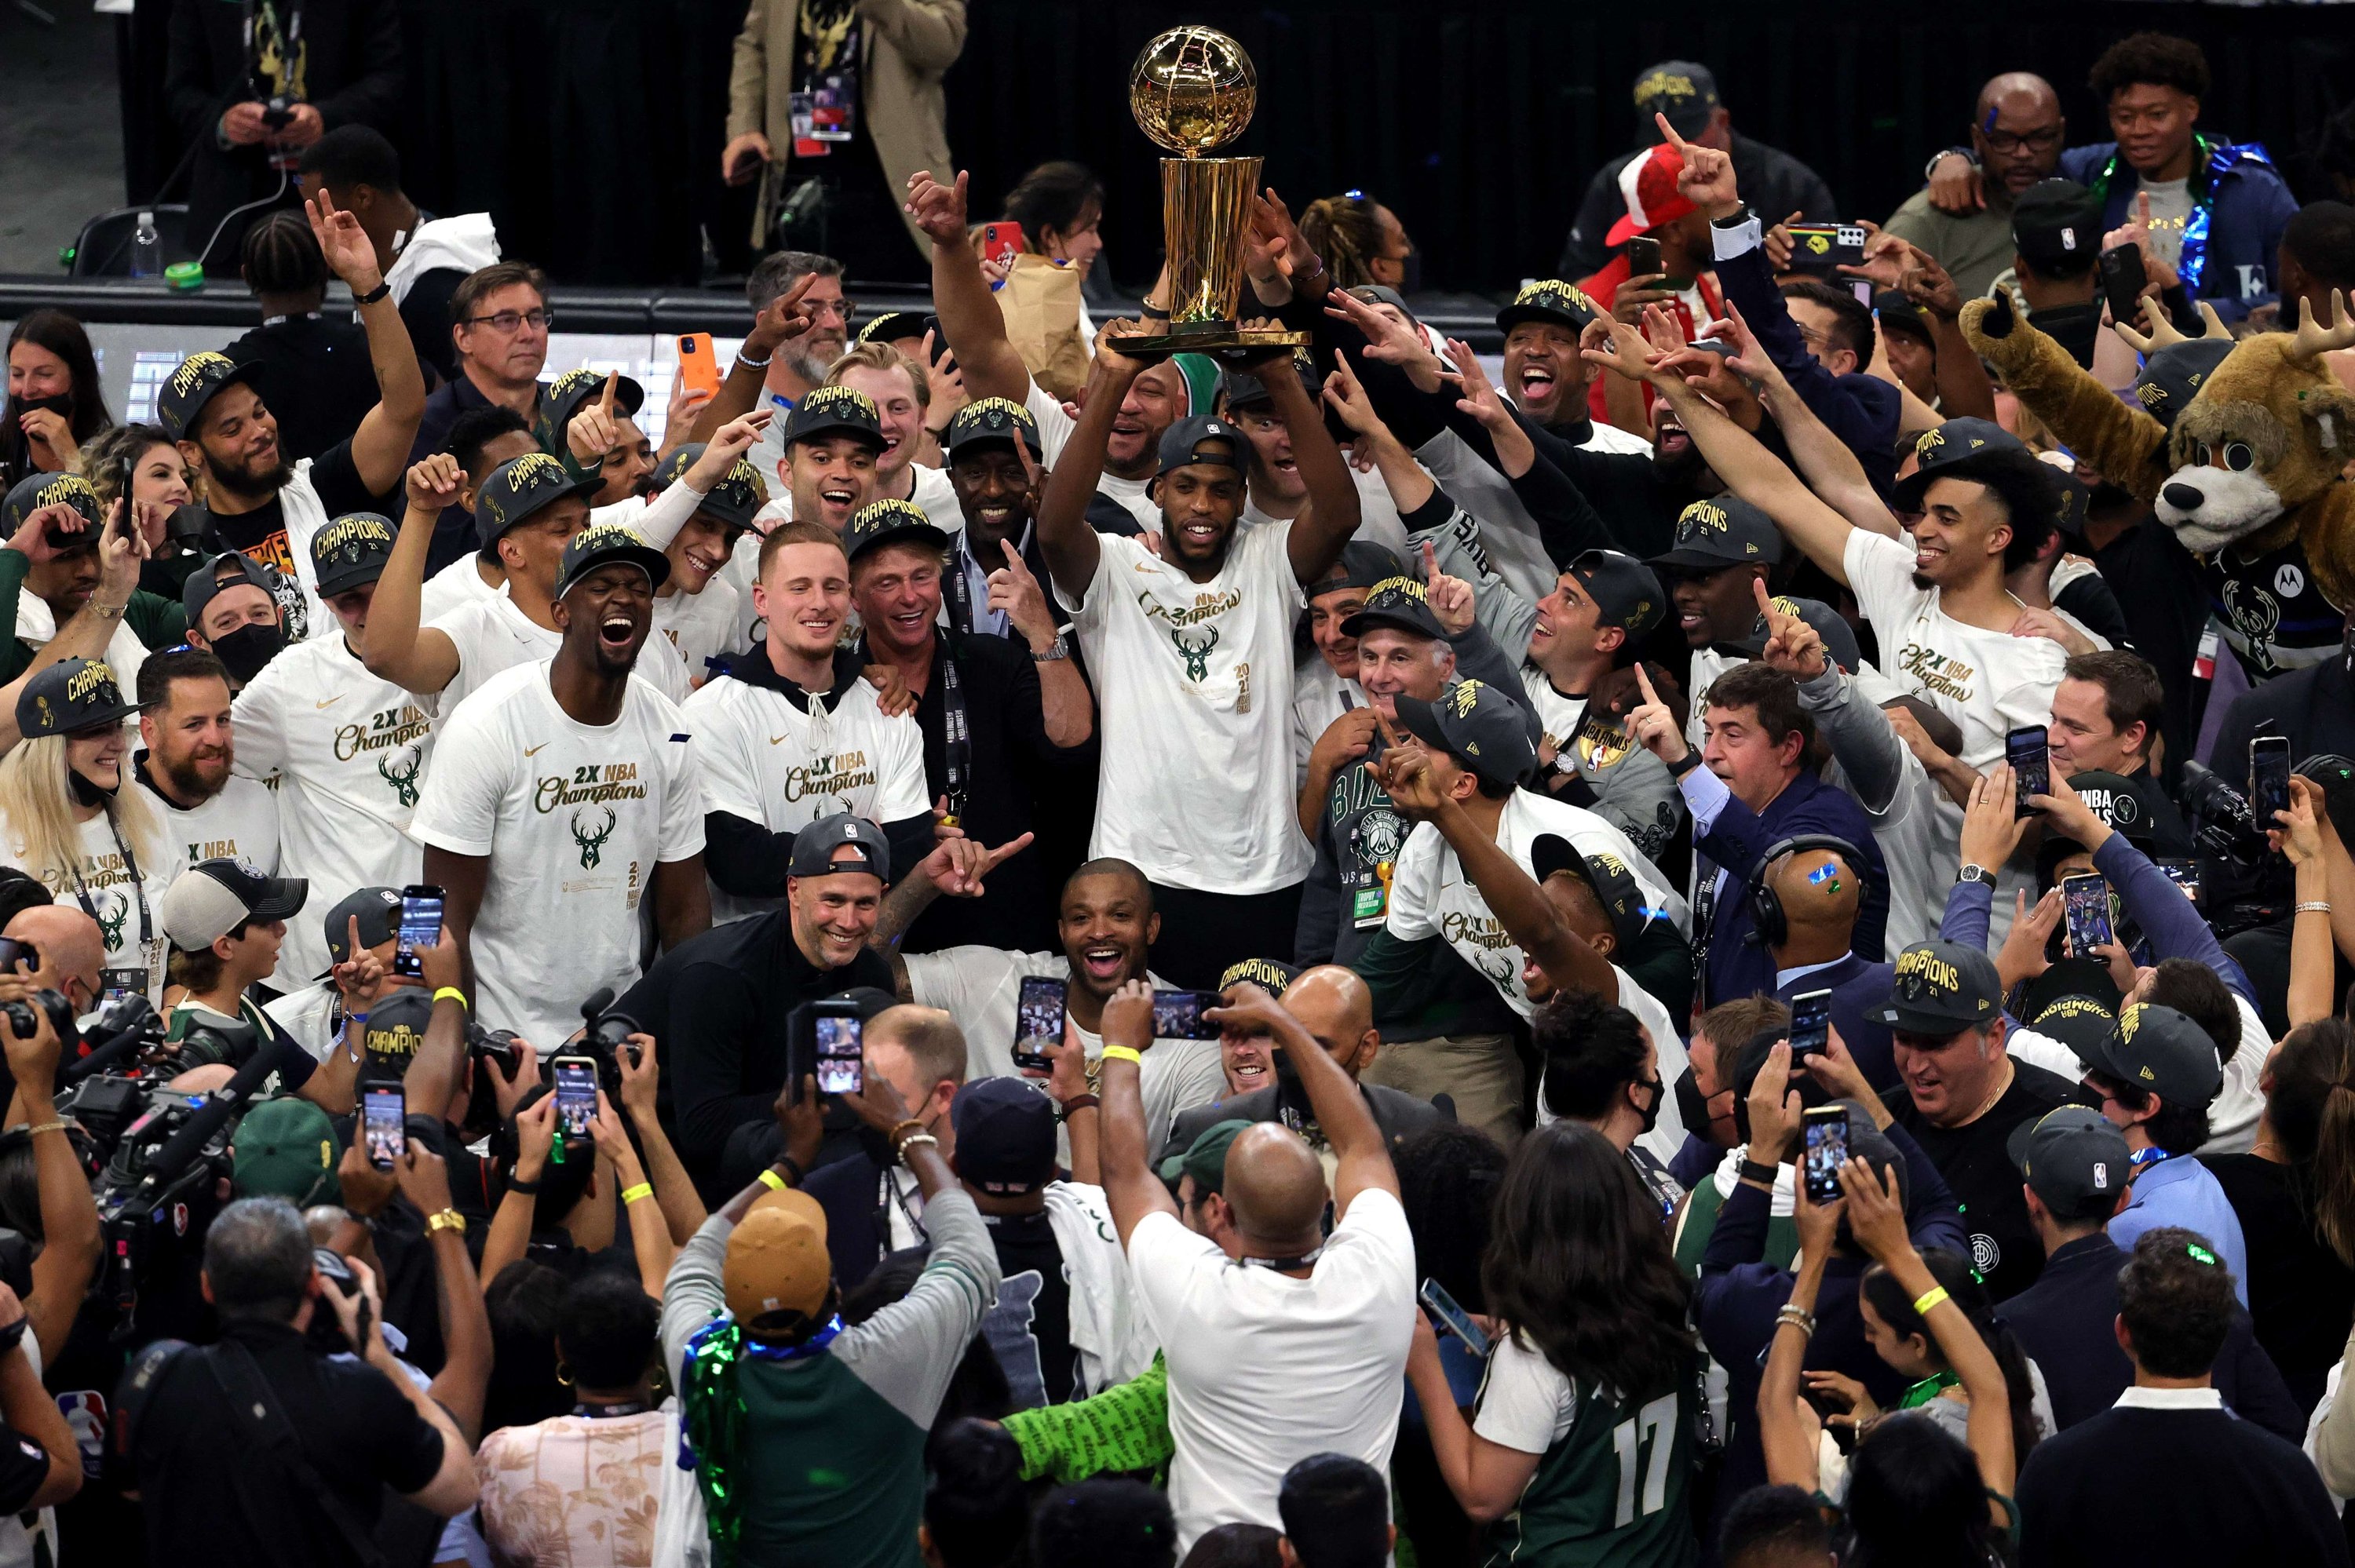 Milwaukee Bucks' 50-year wait ends with NBA championship win